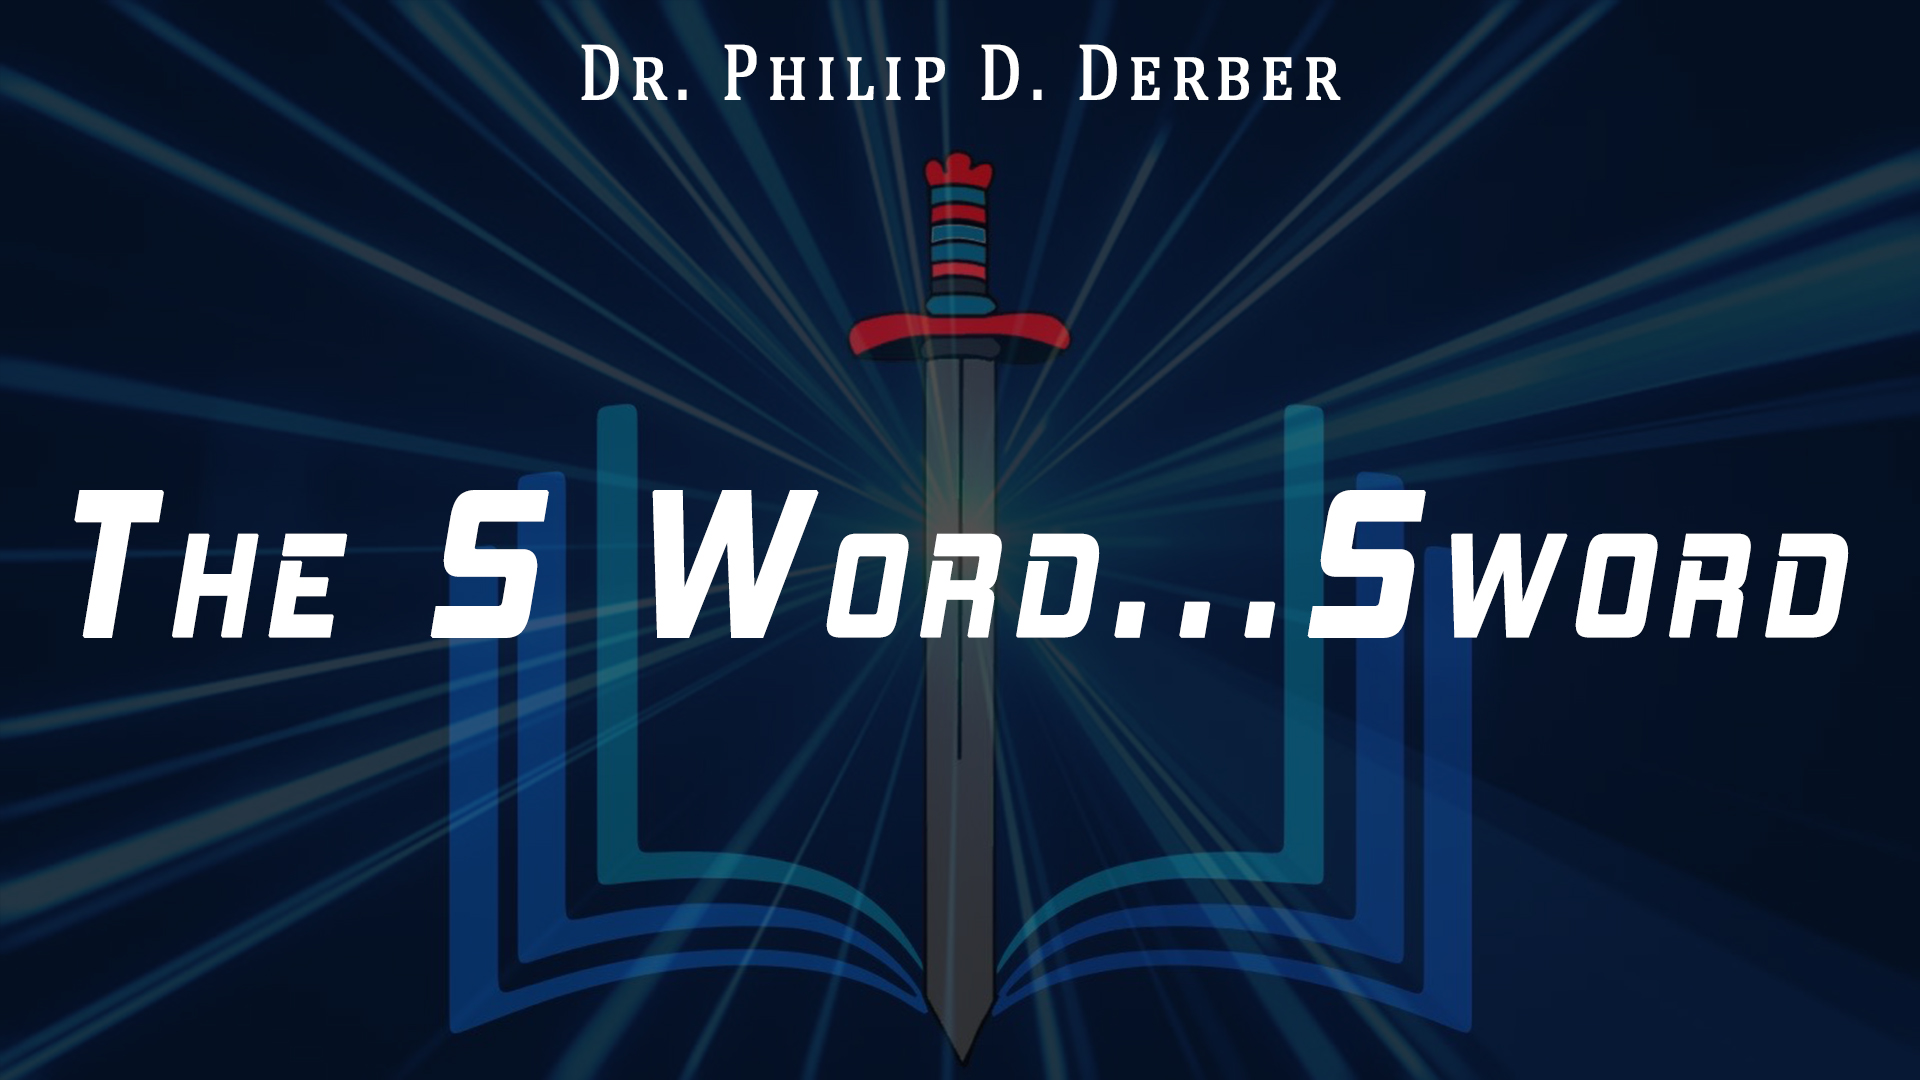 The S WordSword